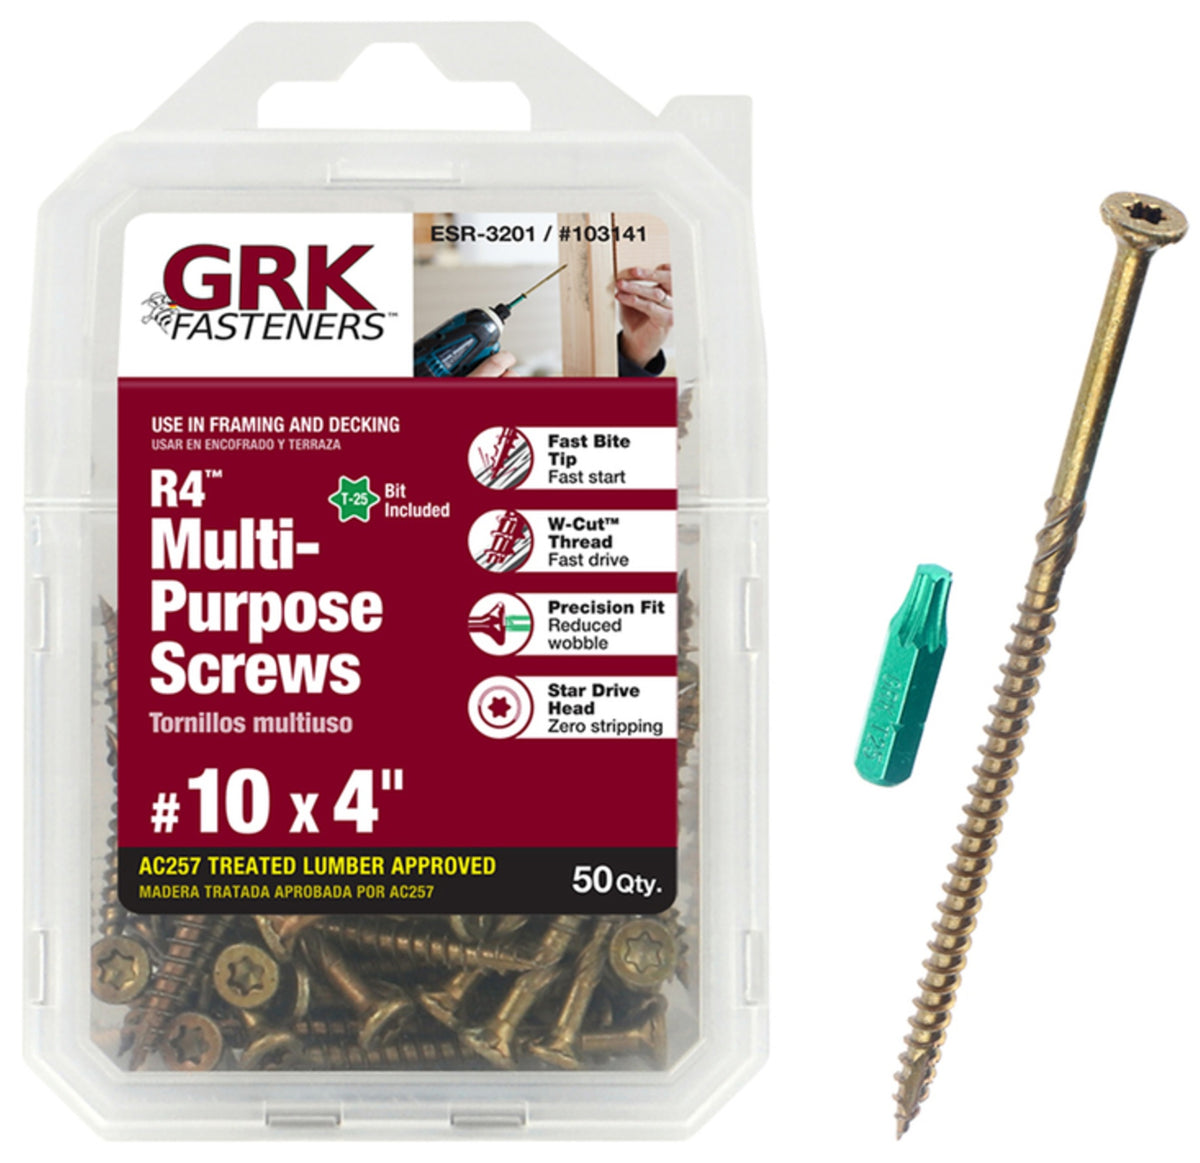 GRK Fasteners 103141 R4 Countersink Head Multi-Purpose Screws, #10 x 4"